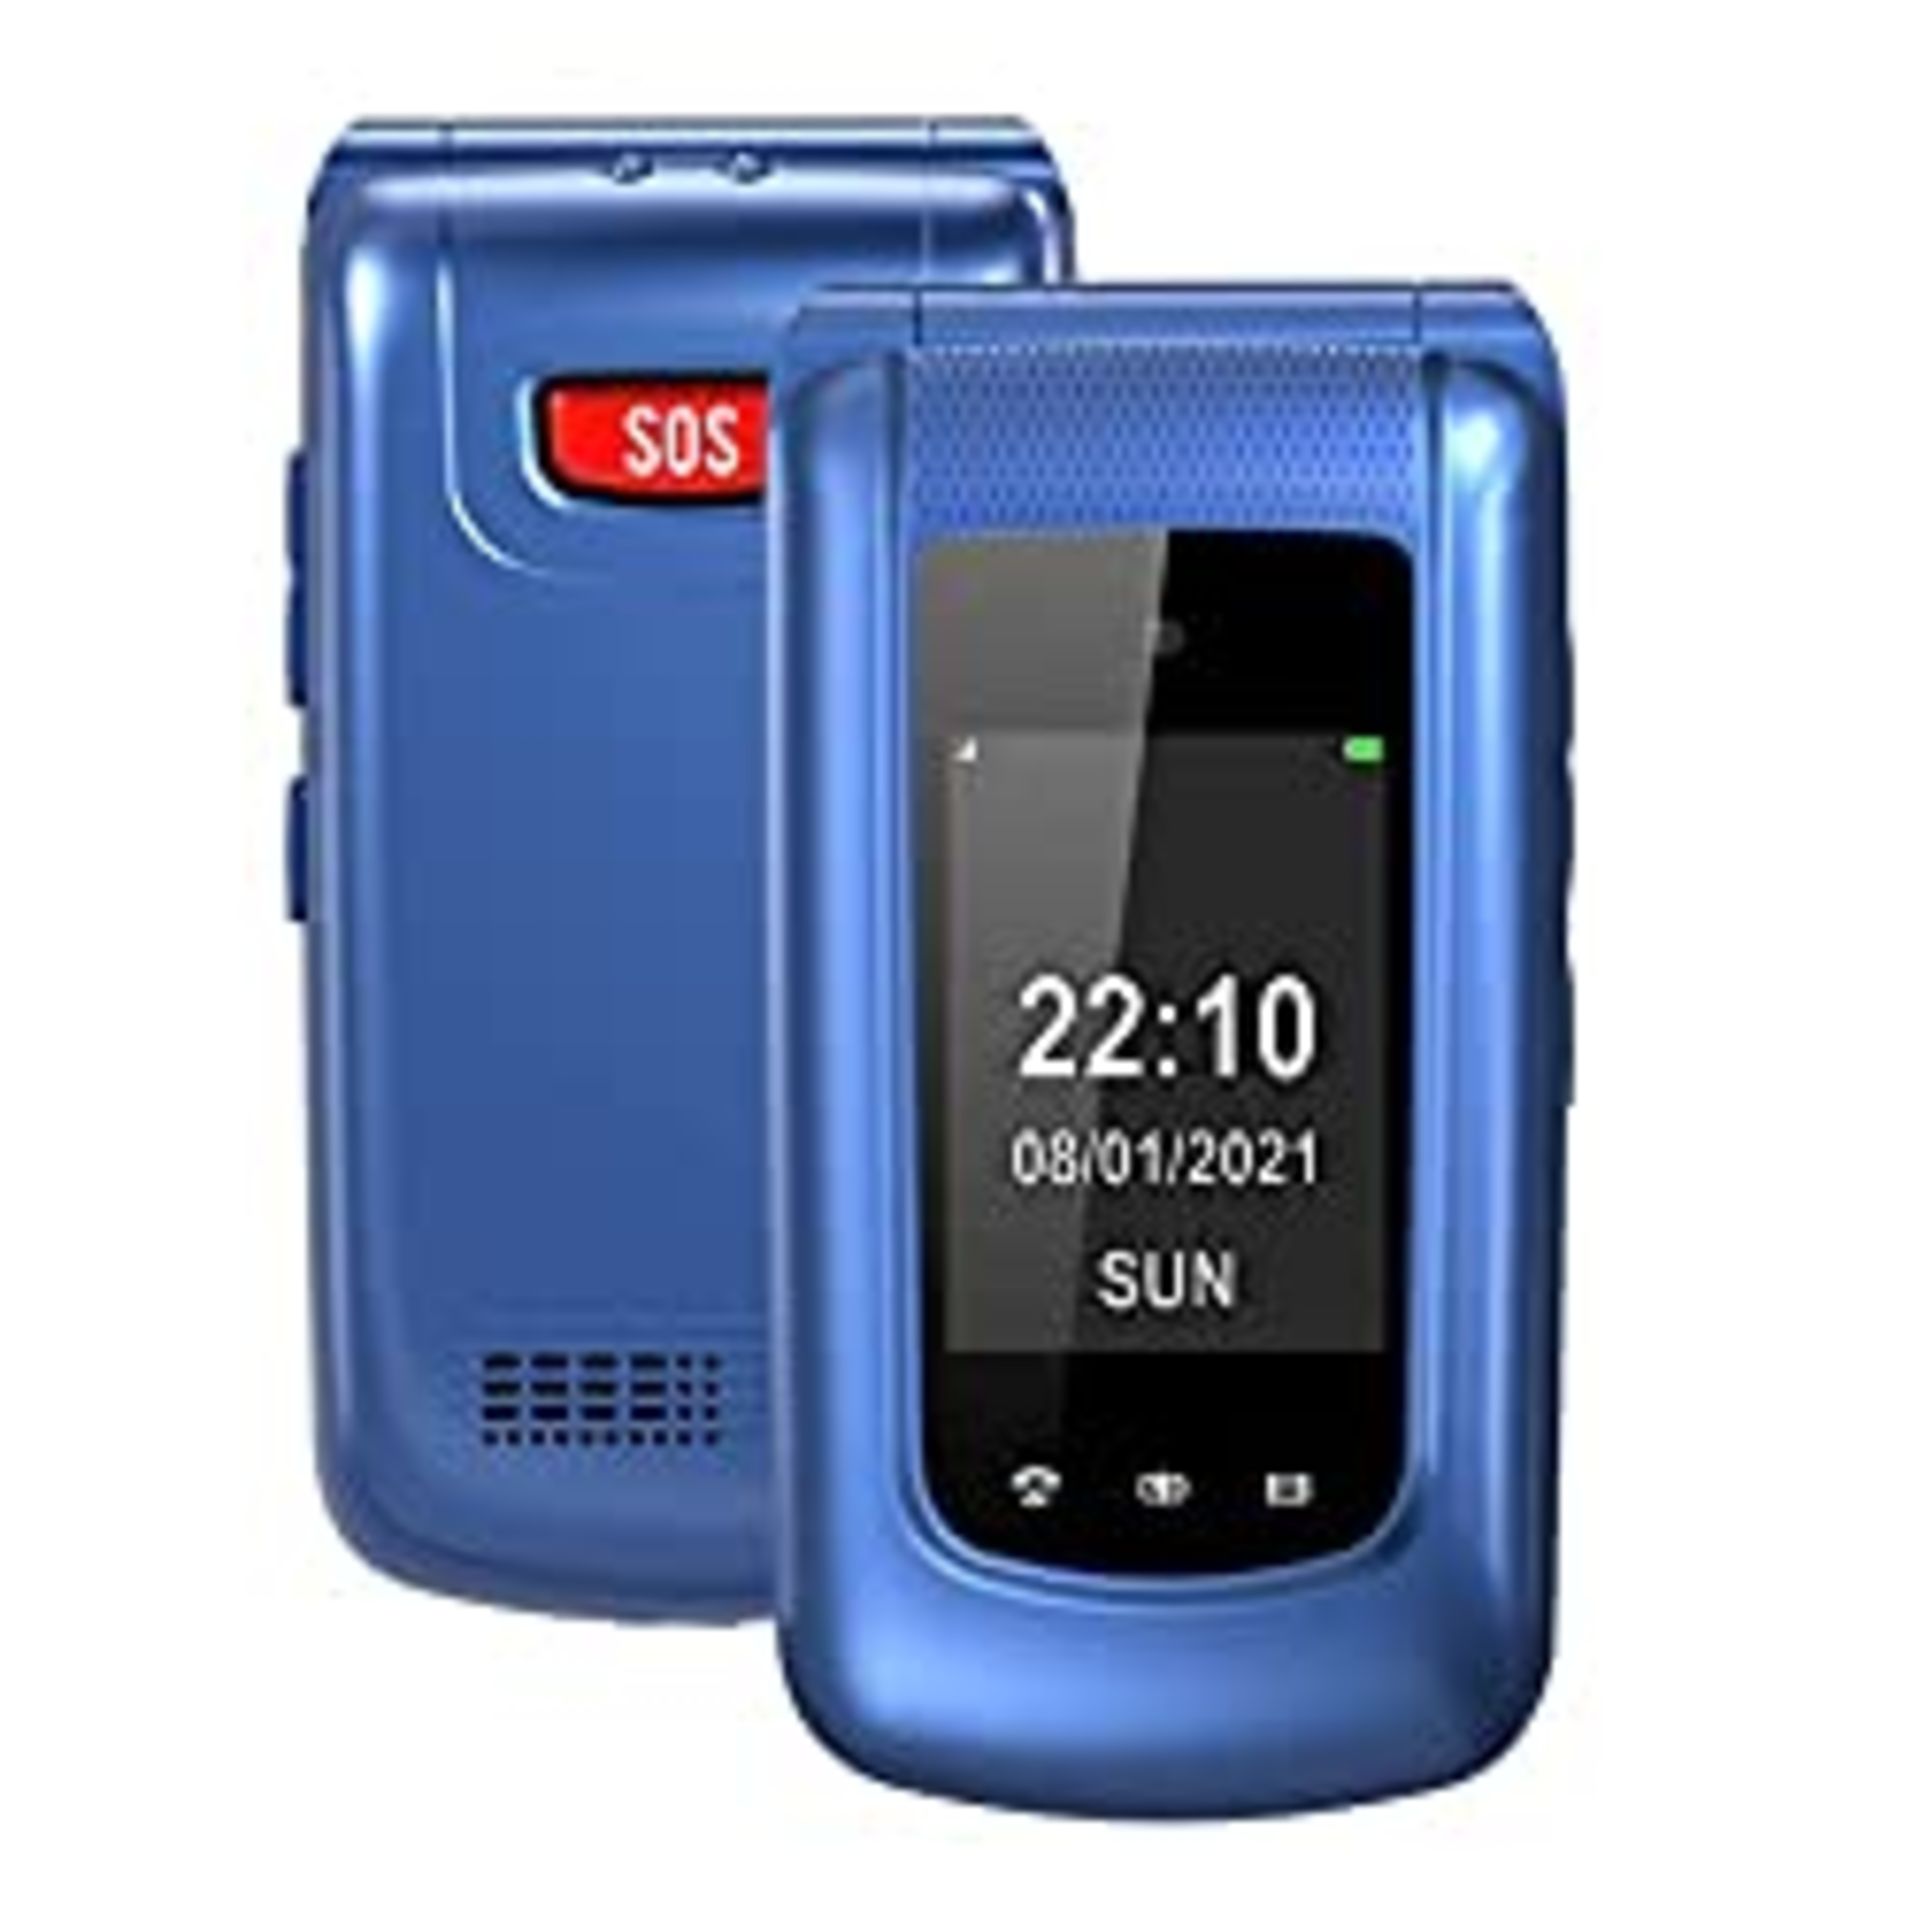 RRP £31.90 Uleway 2G Big Button Flip Mobile Phone Sim Free Unlocked